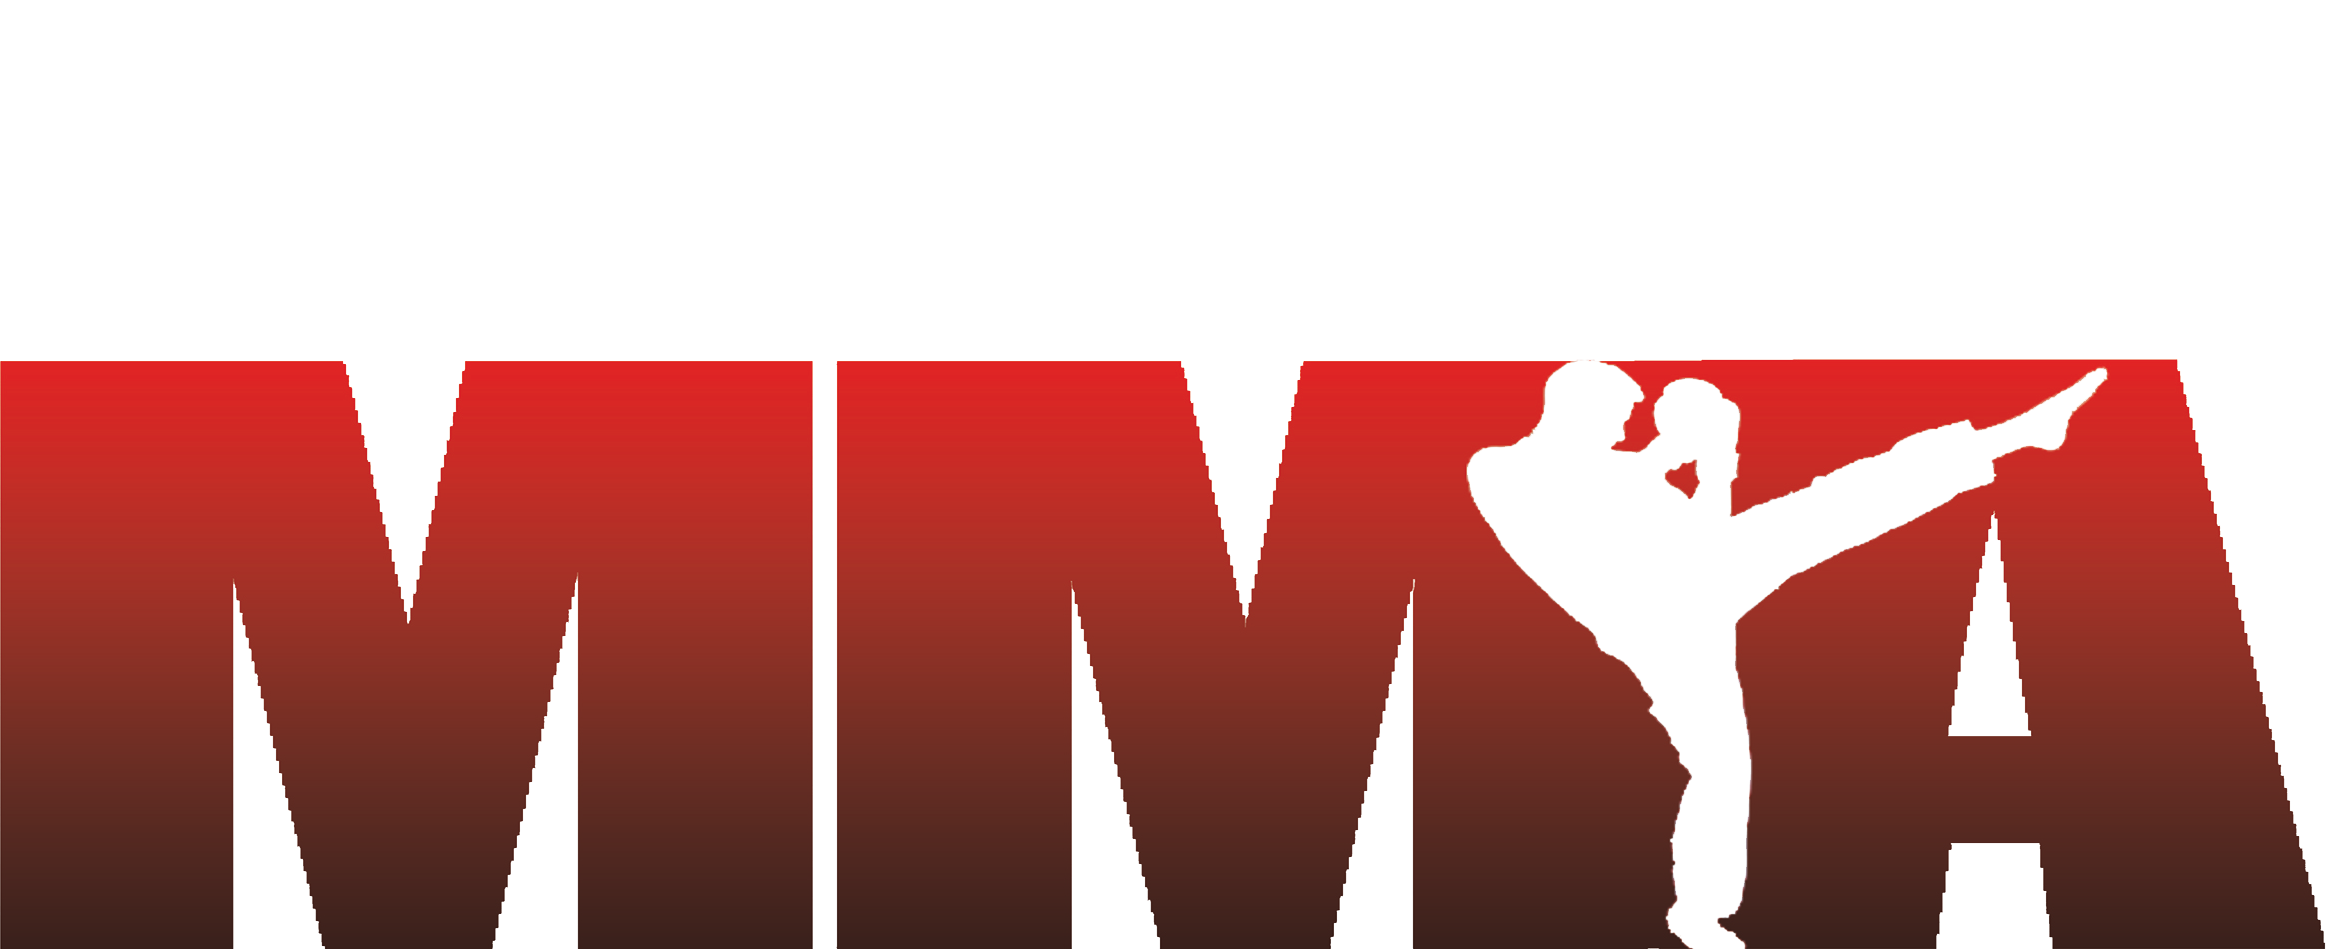 ММА логотип